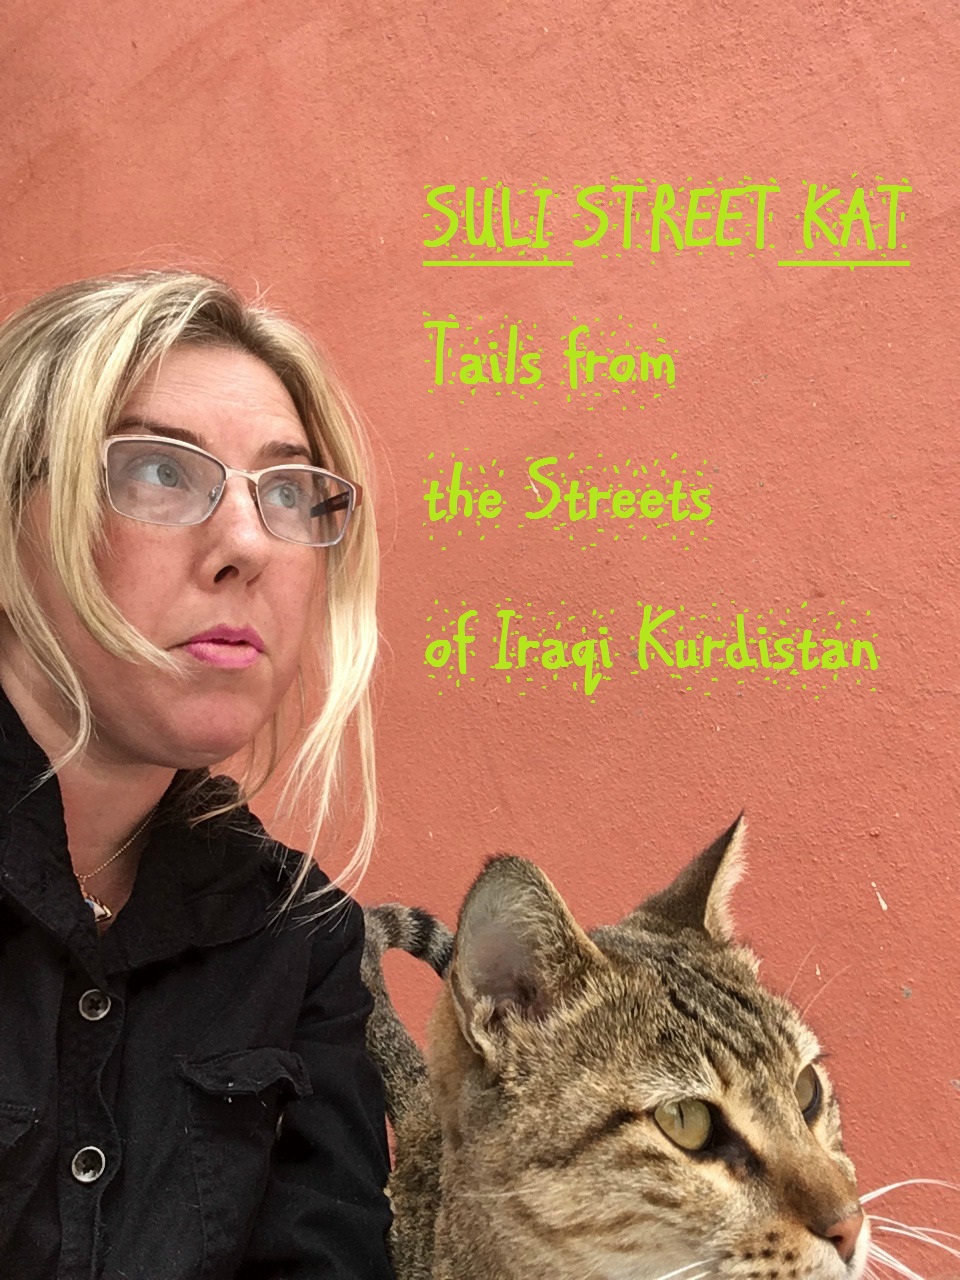 Suli Street Kat